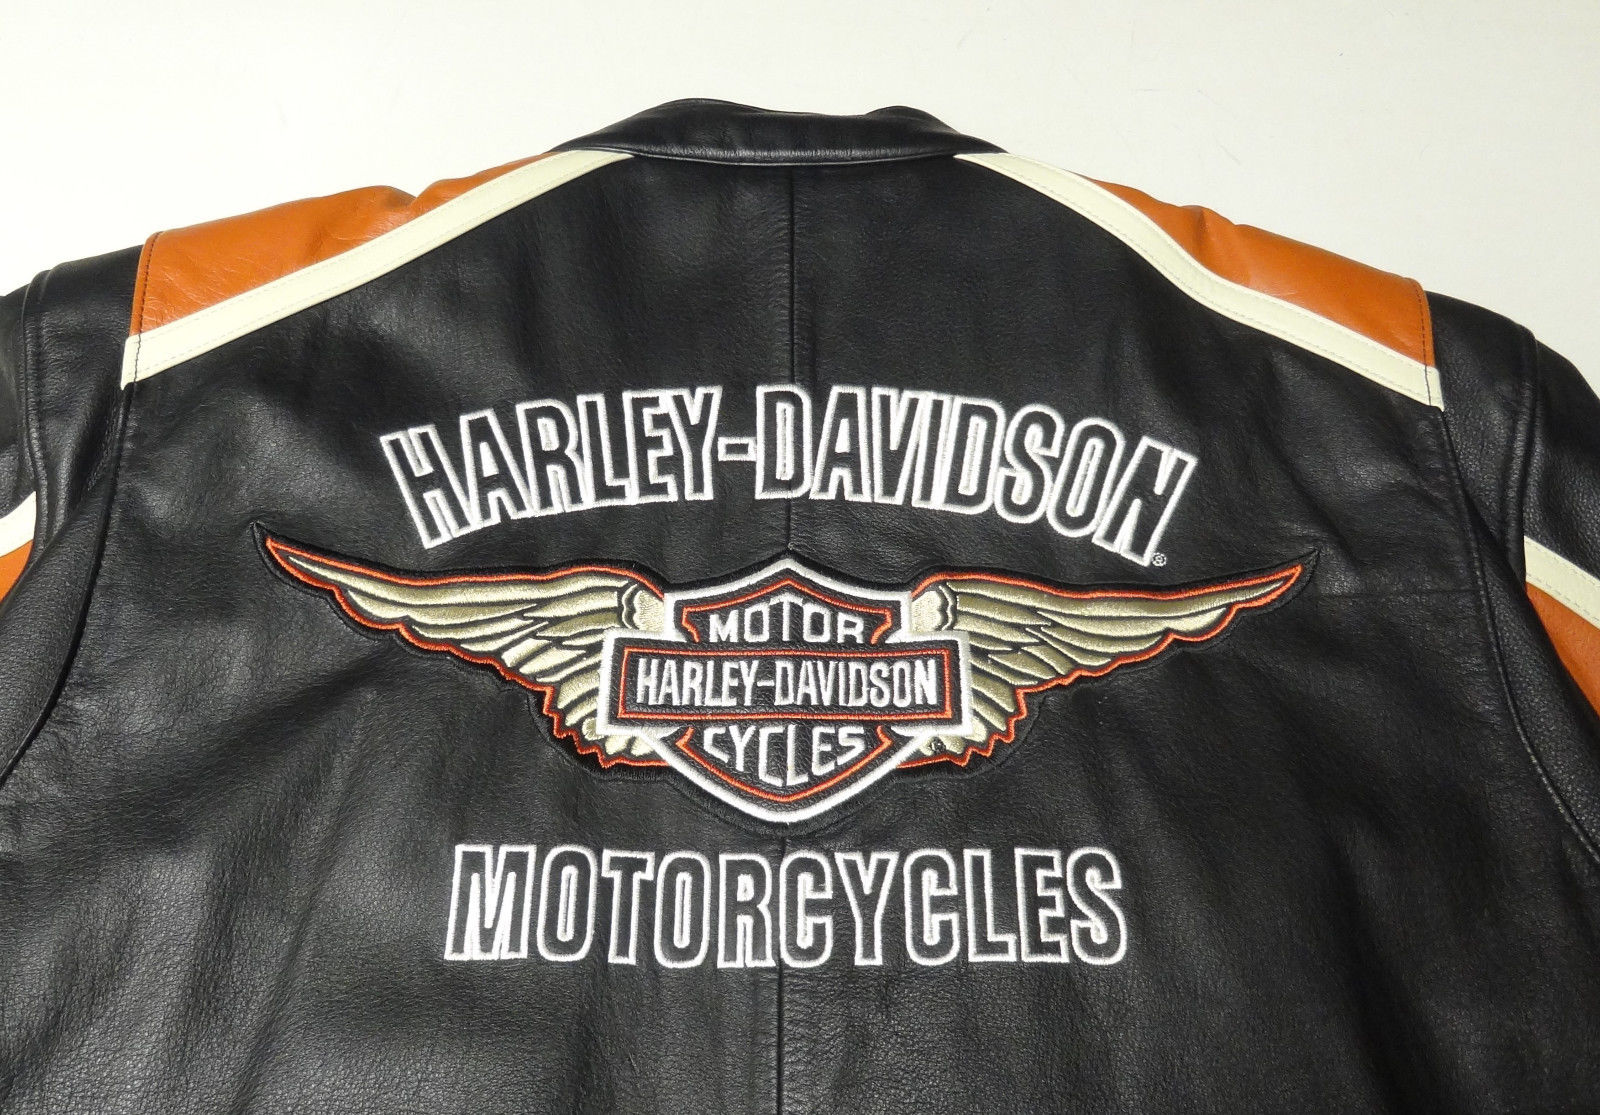 Harley Davidson Leather Jacket - Brand New - Size XL - Harley Davidson ...